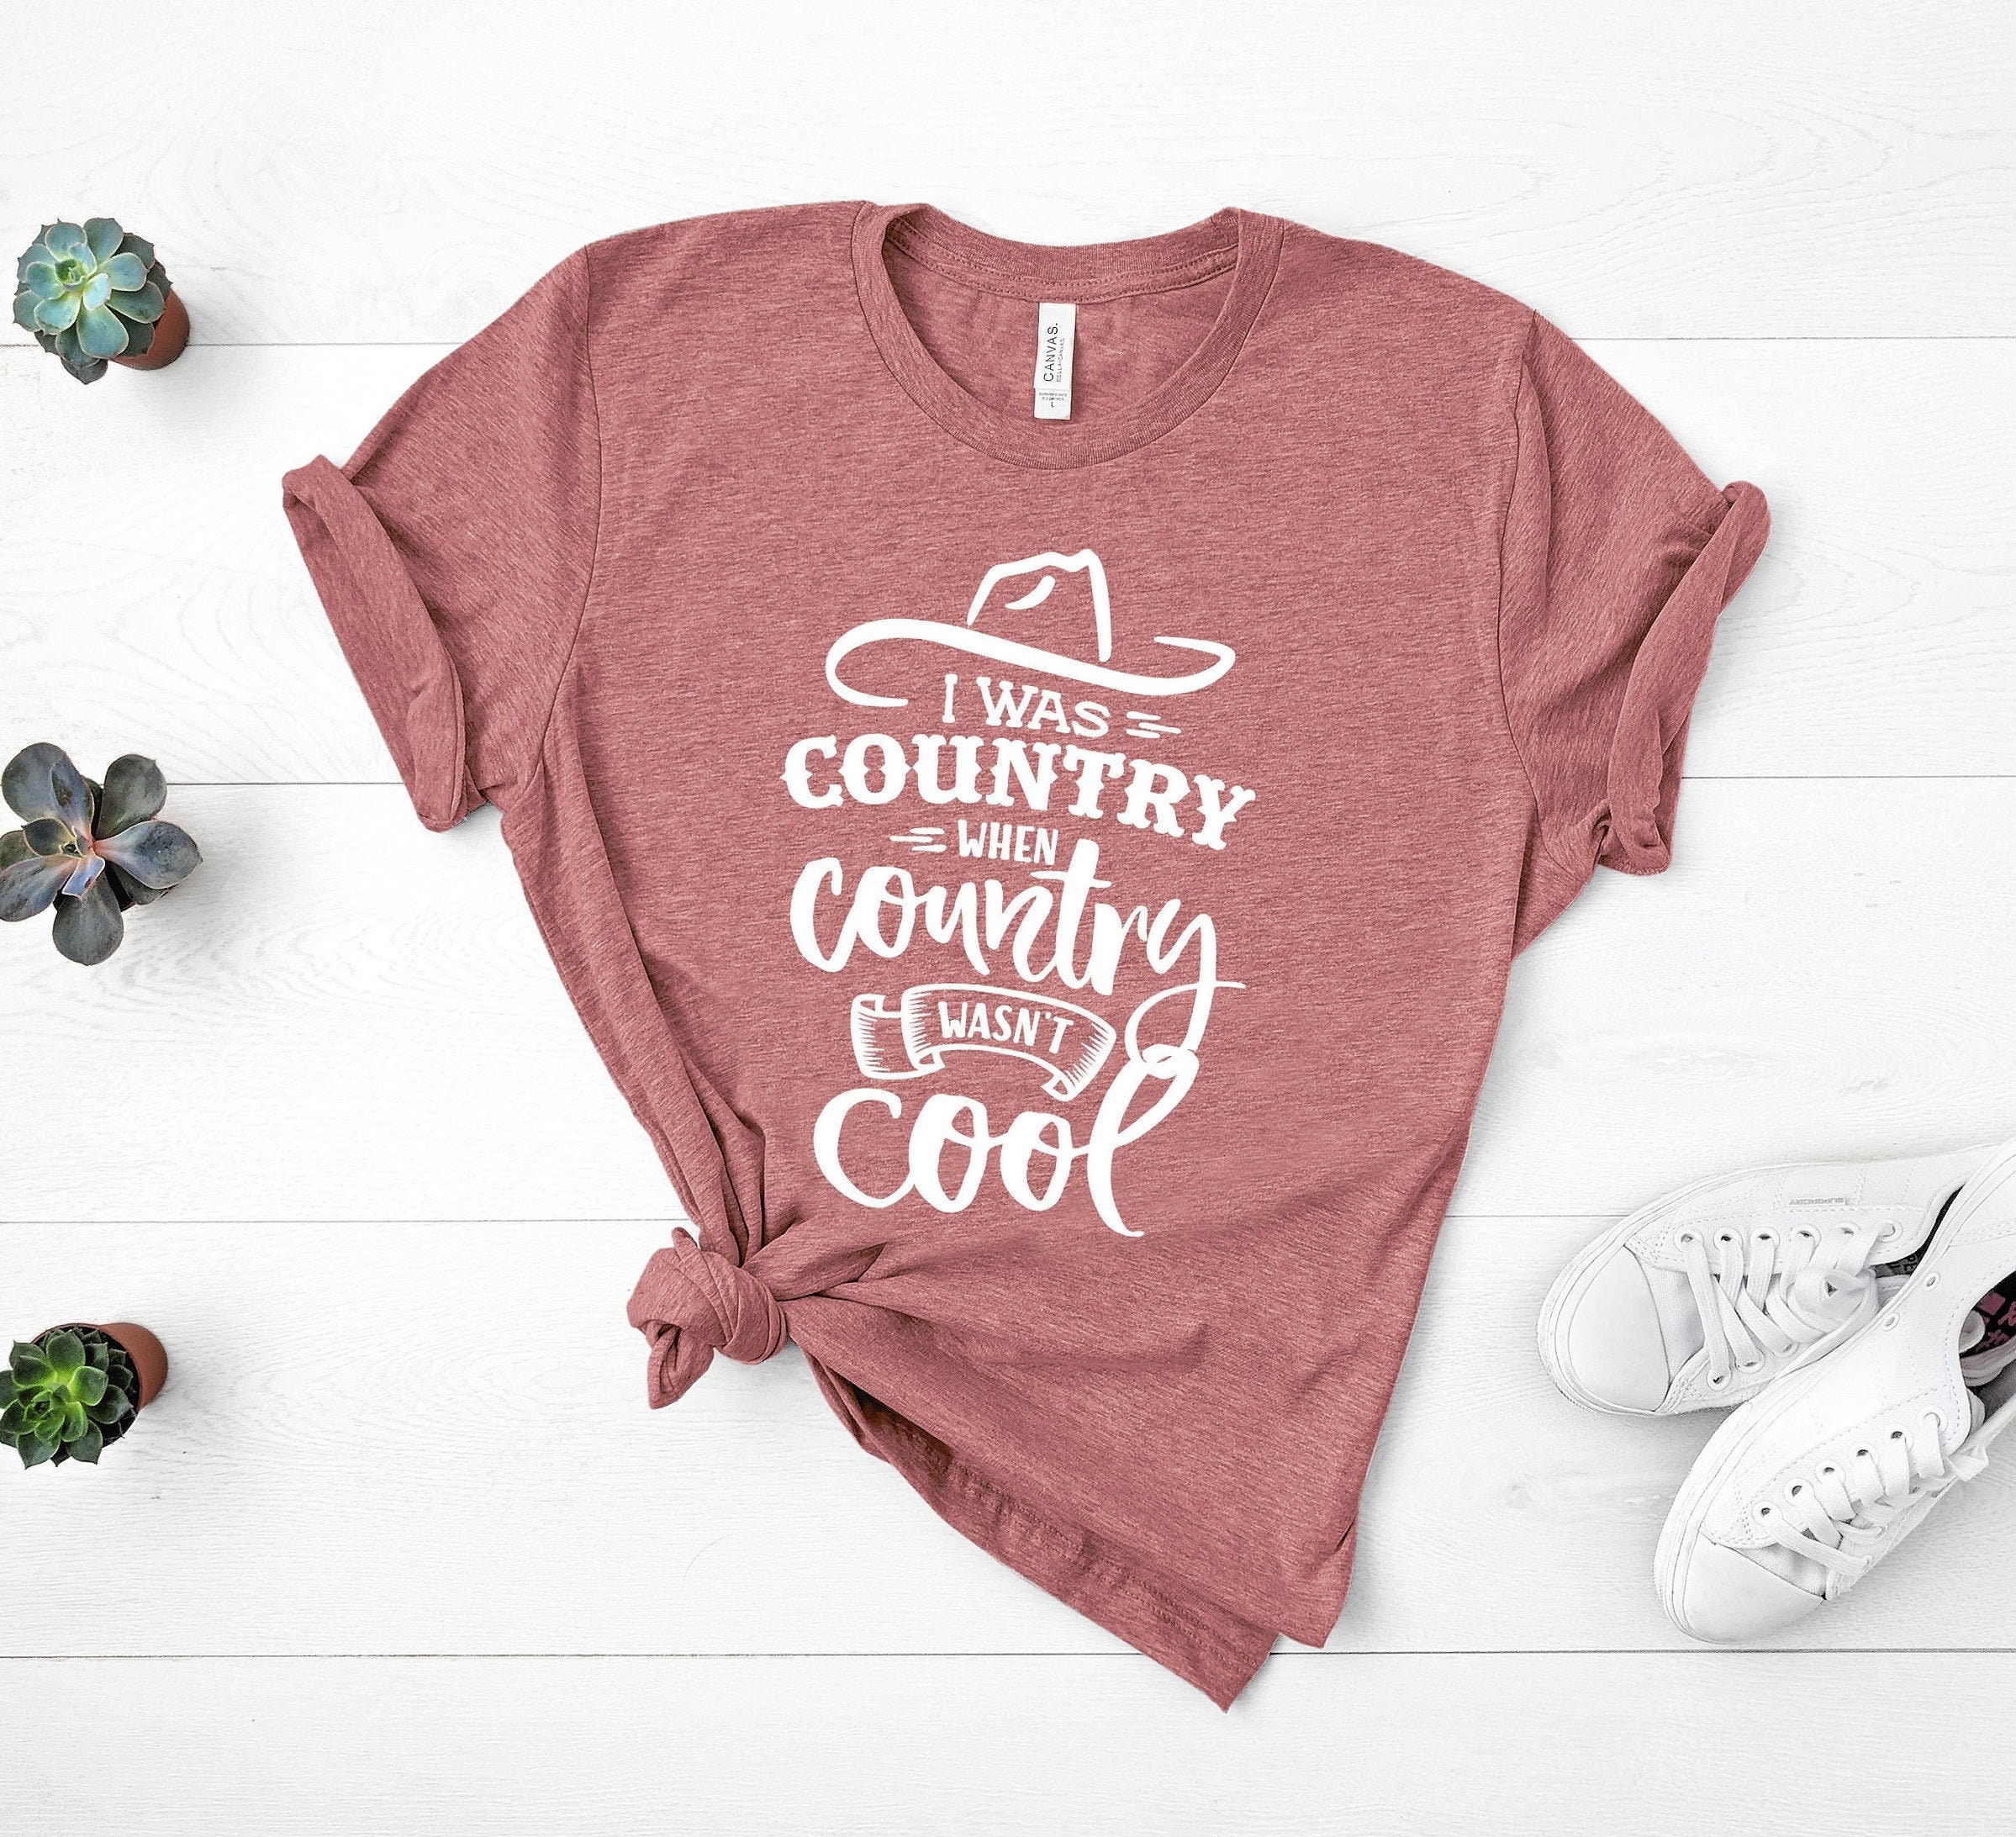 900+ Girls printing Design ideas  girls tshirts, toddler graphic